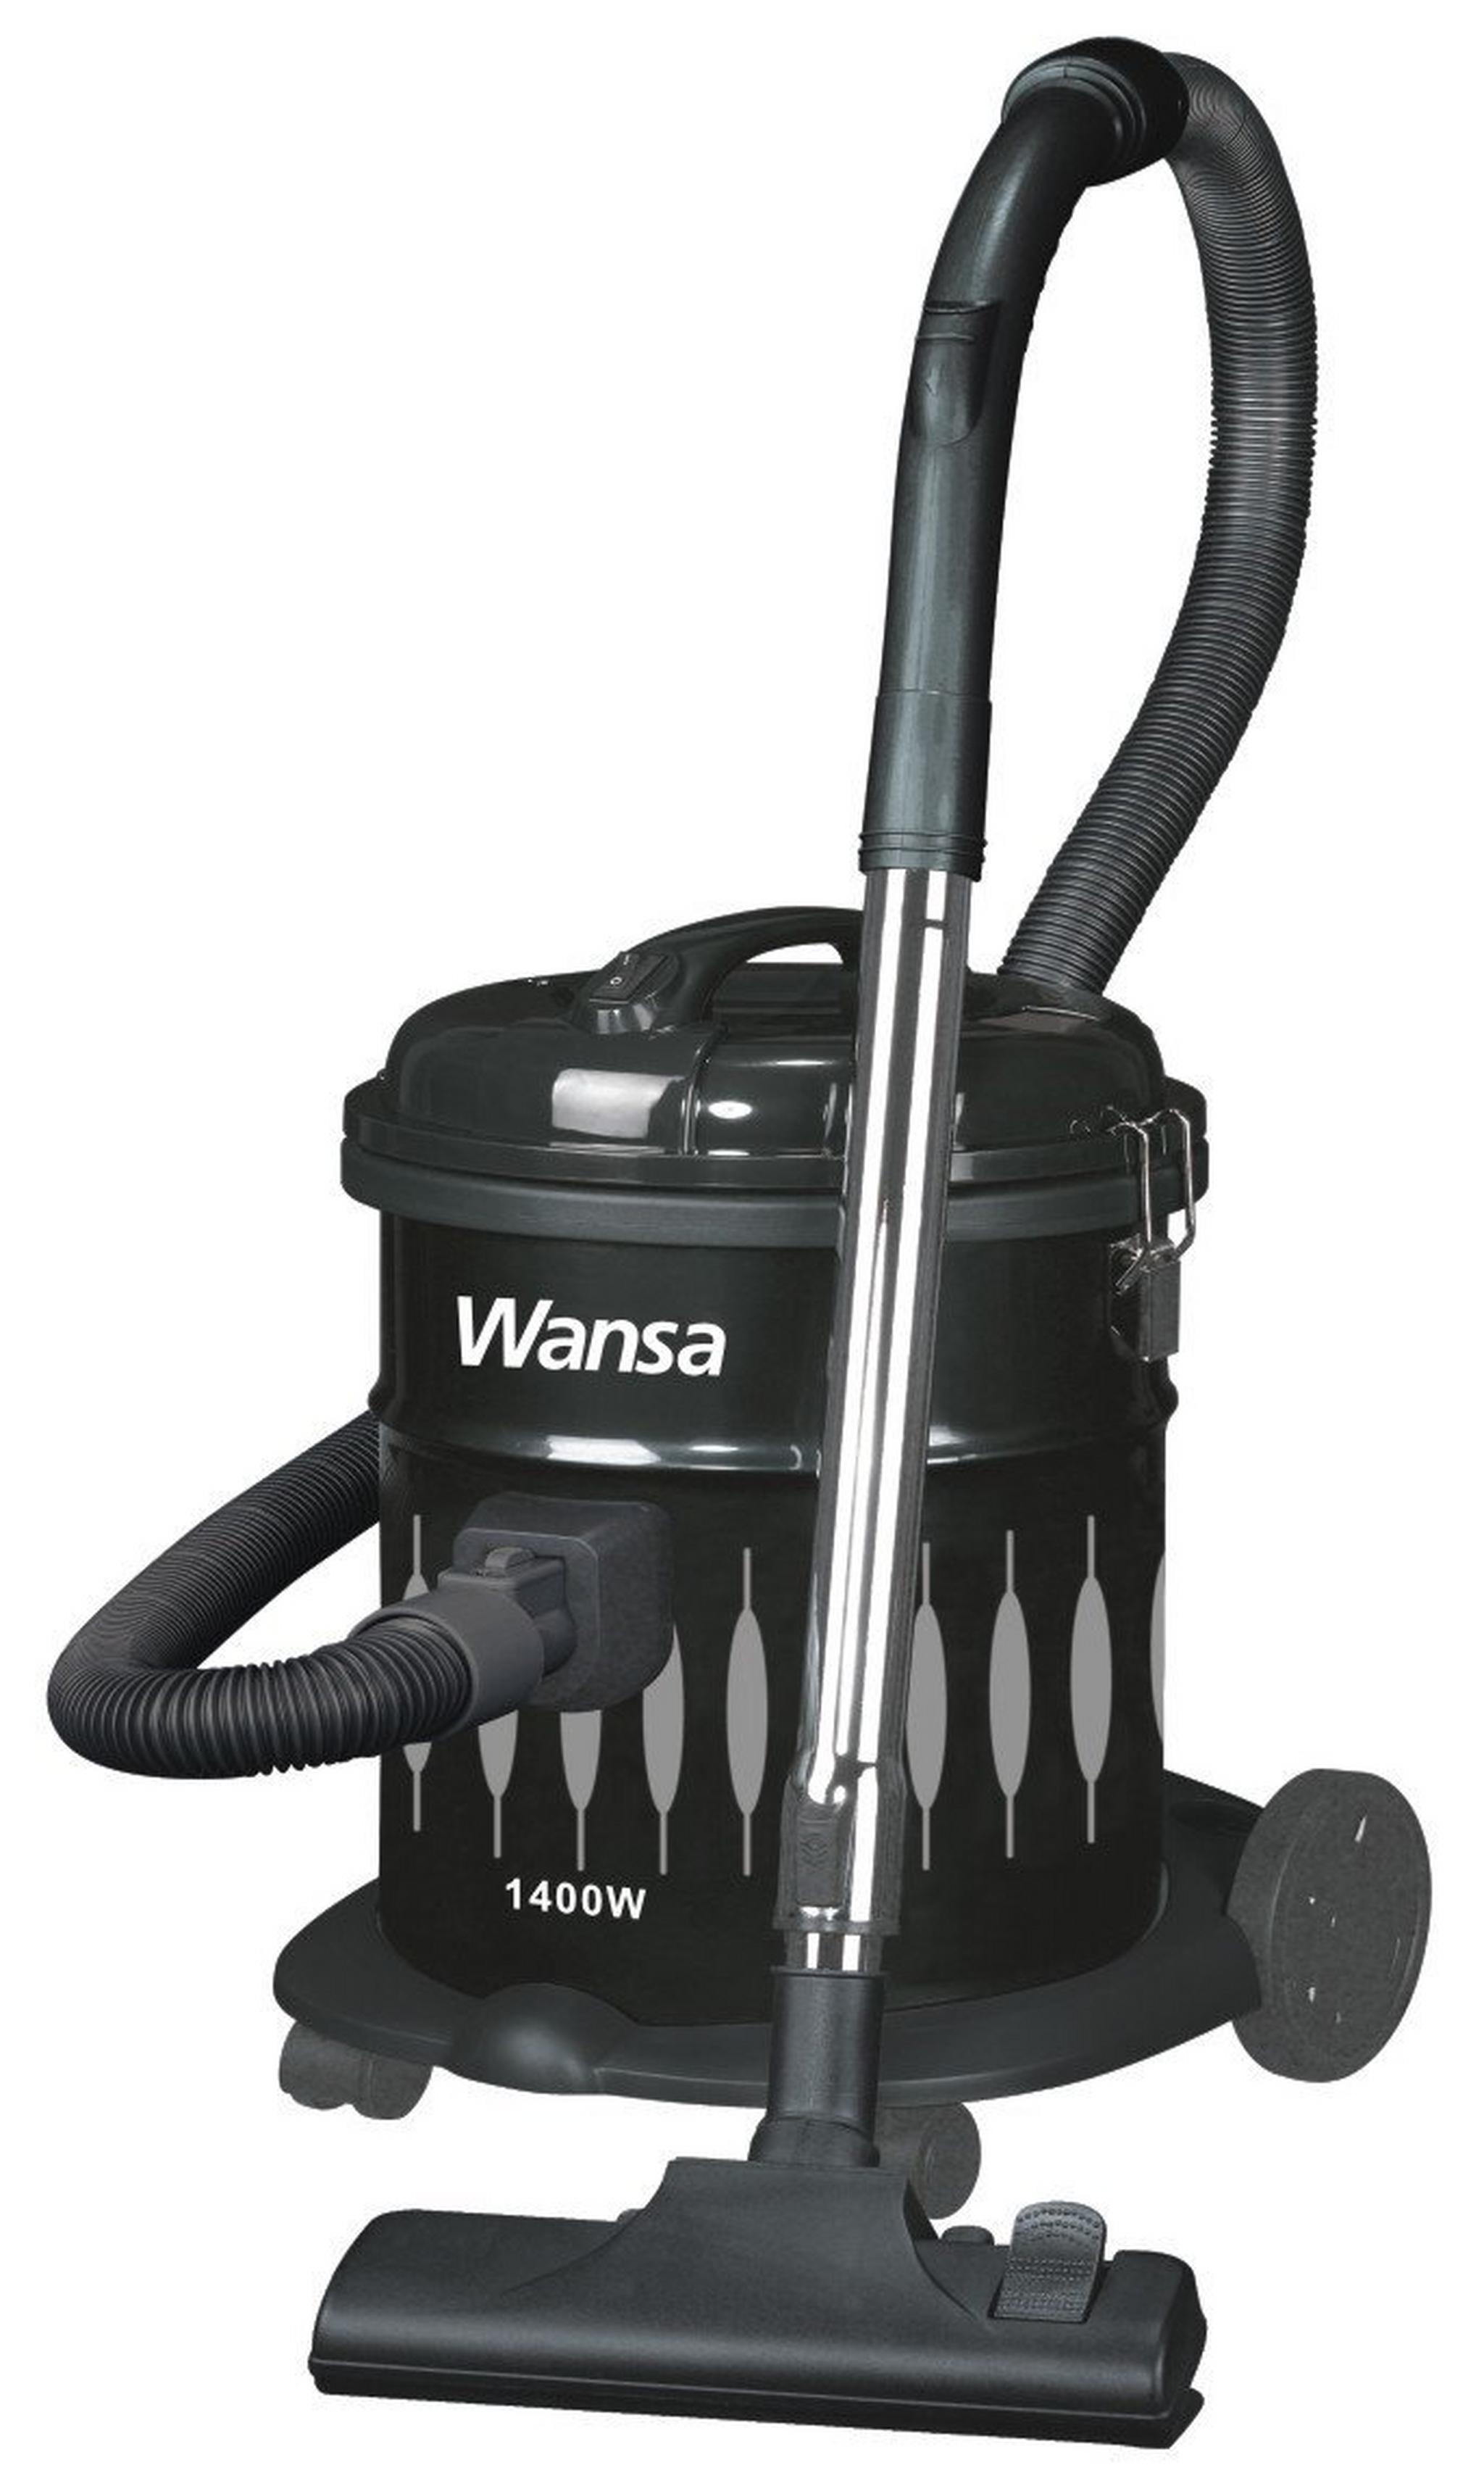 Wansa Drum Vacuum Cleaner, 1400W, 15 Liters, ZL14-04T - Black